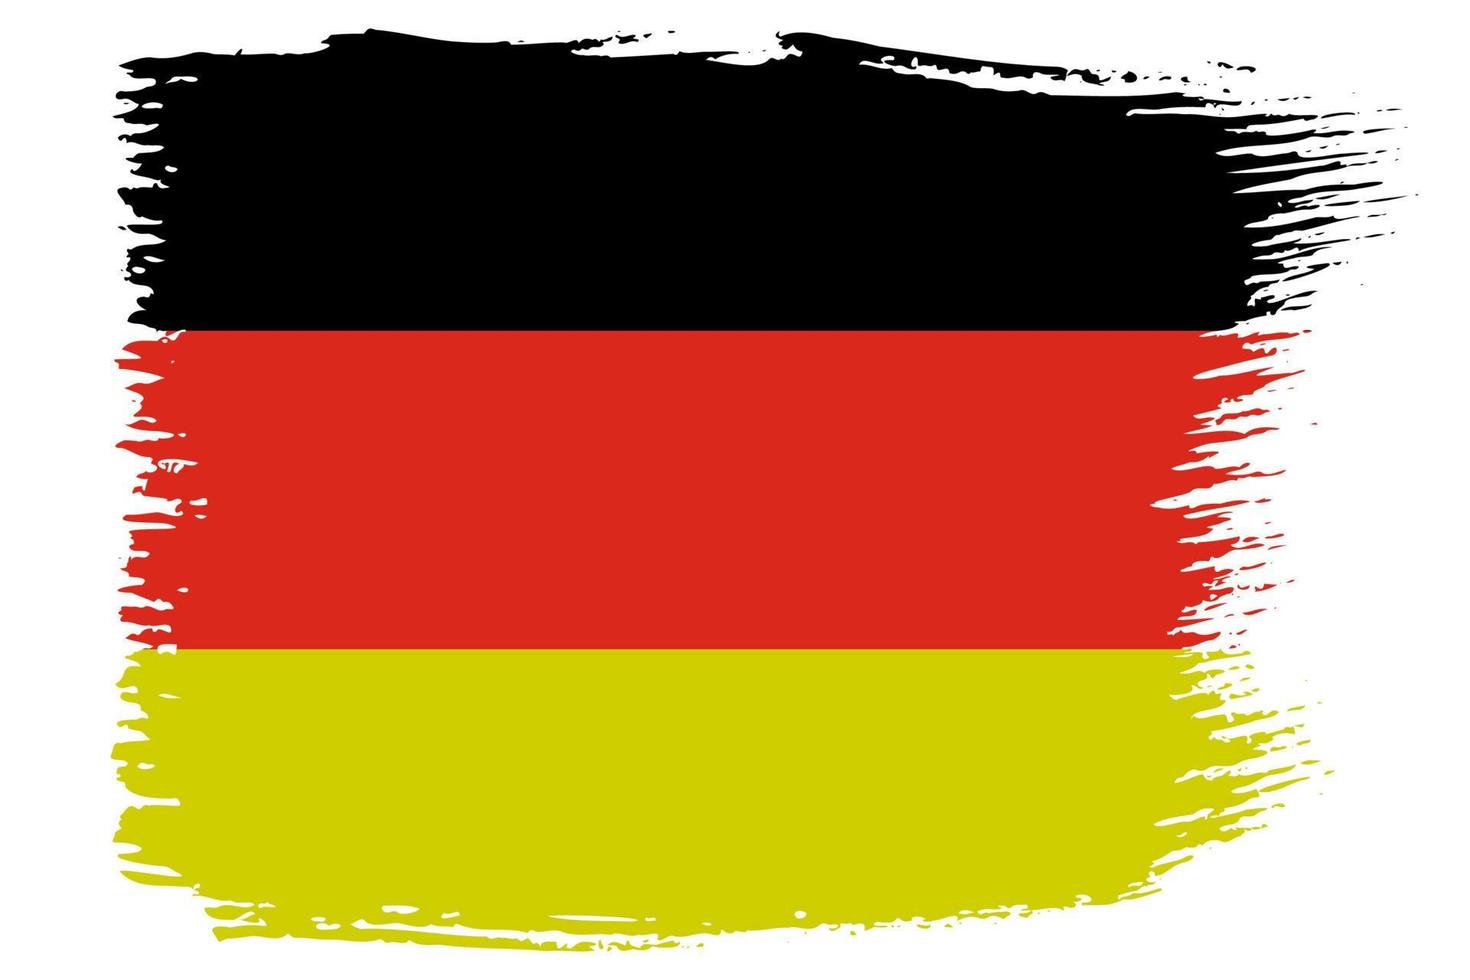 Germany national flag vector